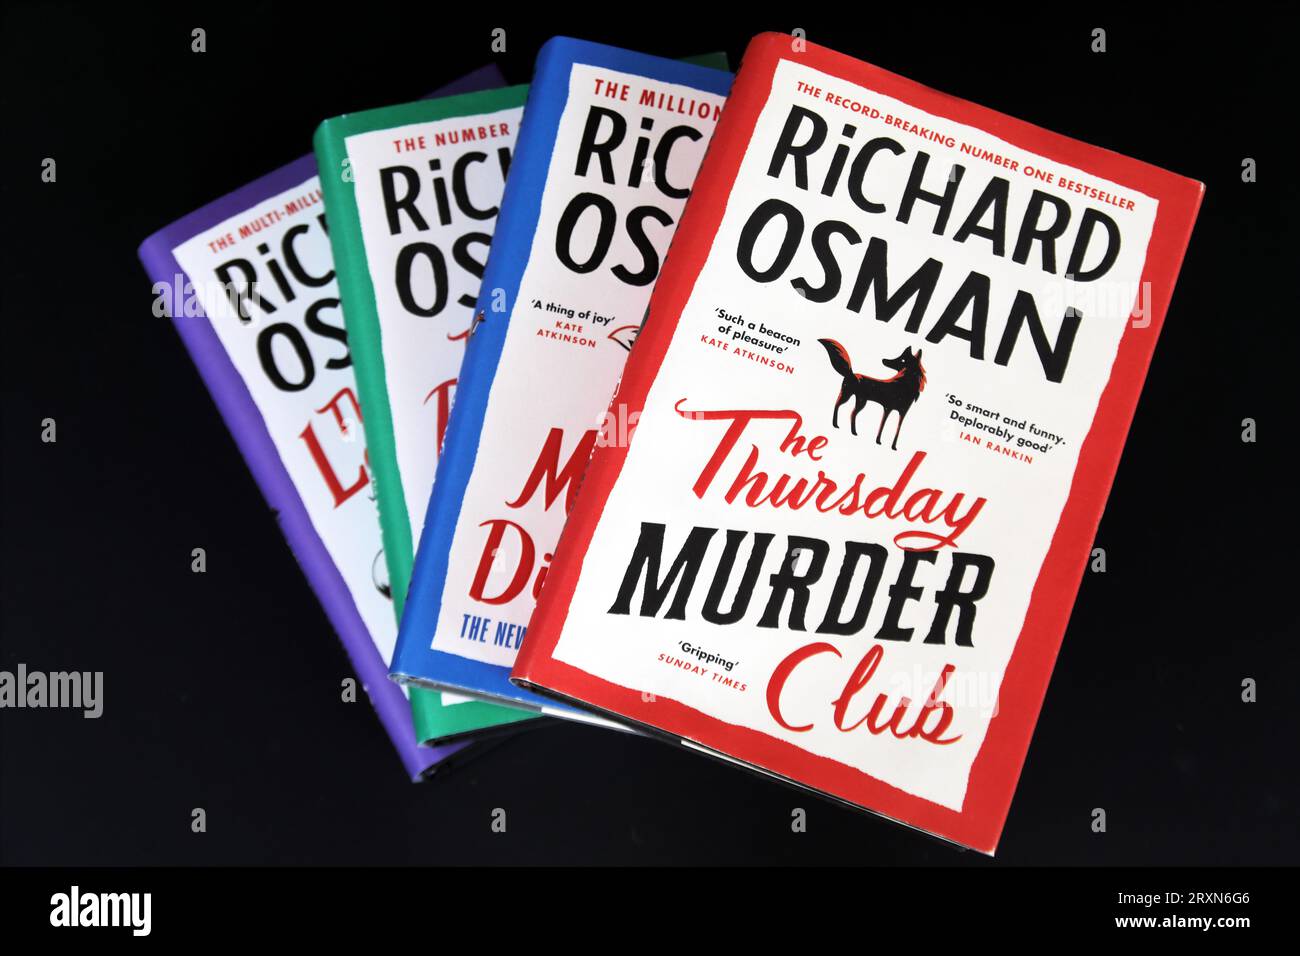 Richard Osman Thursday Murder Club Series Stock Photo